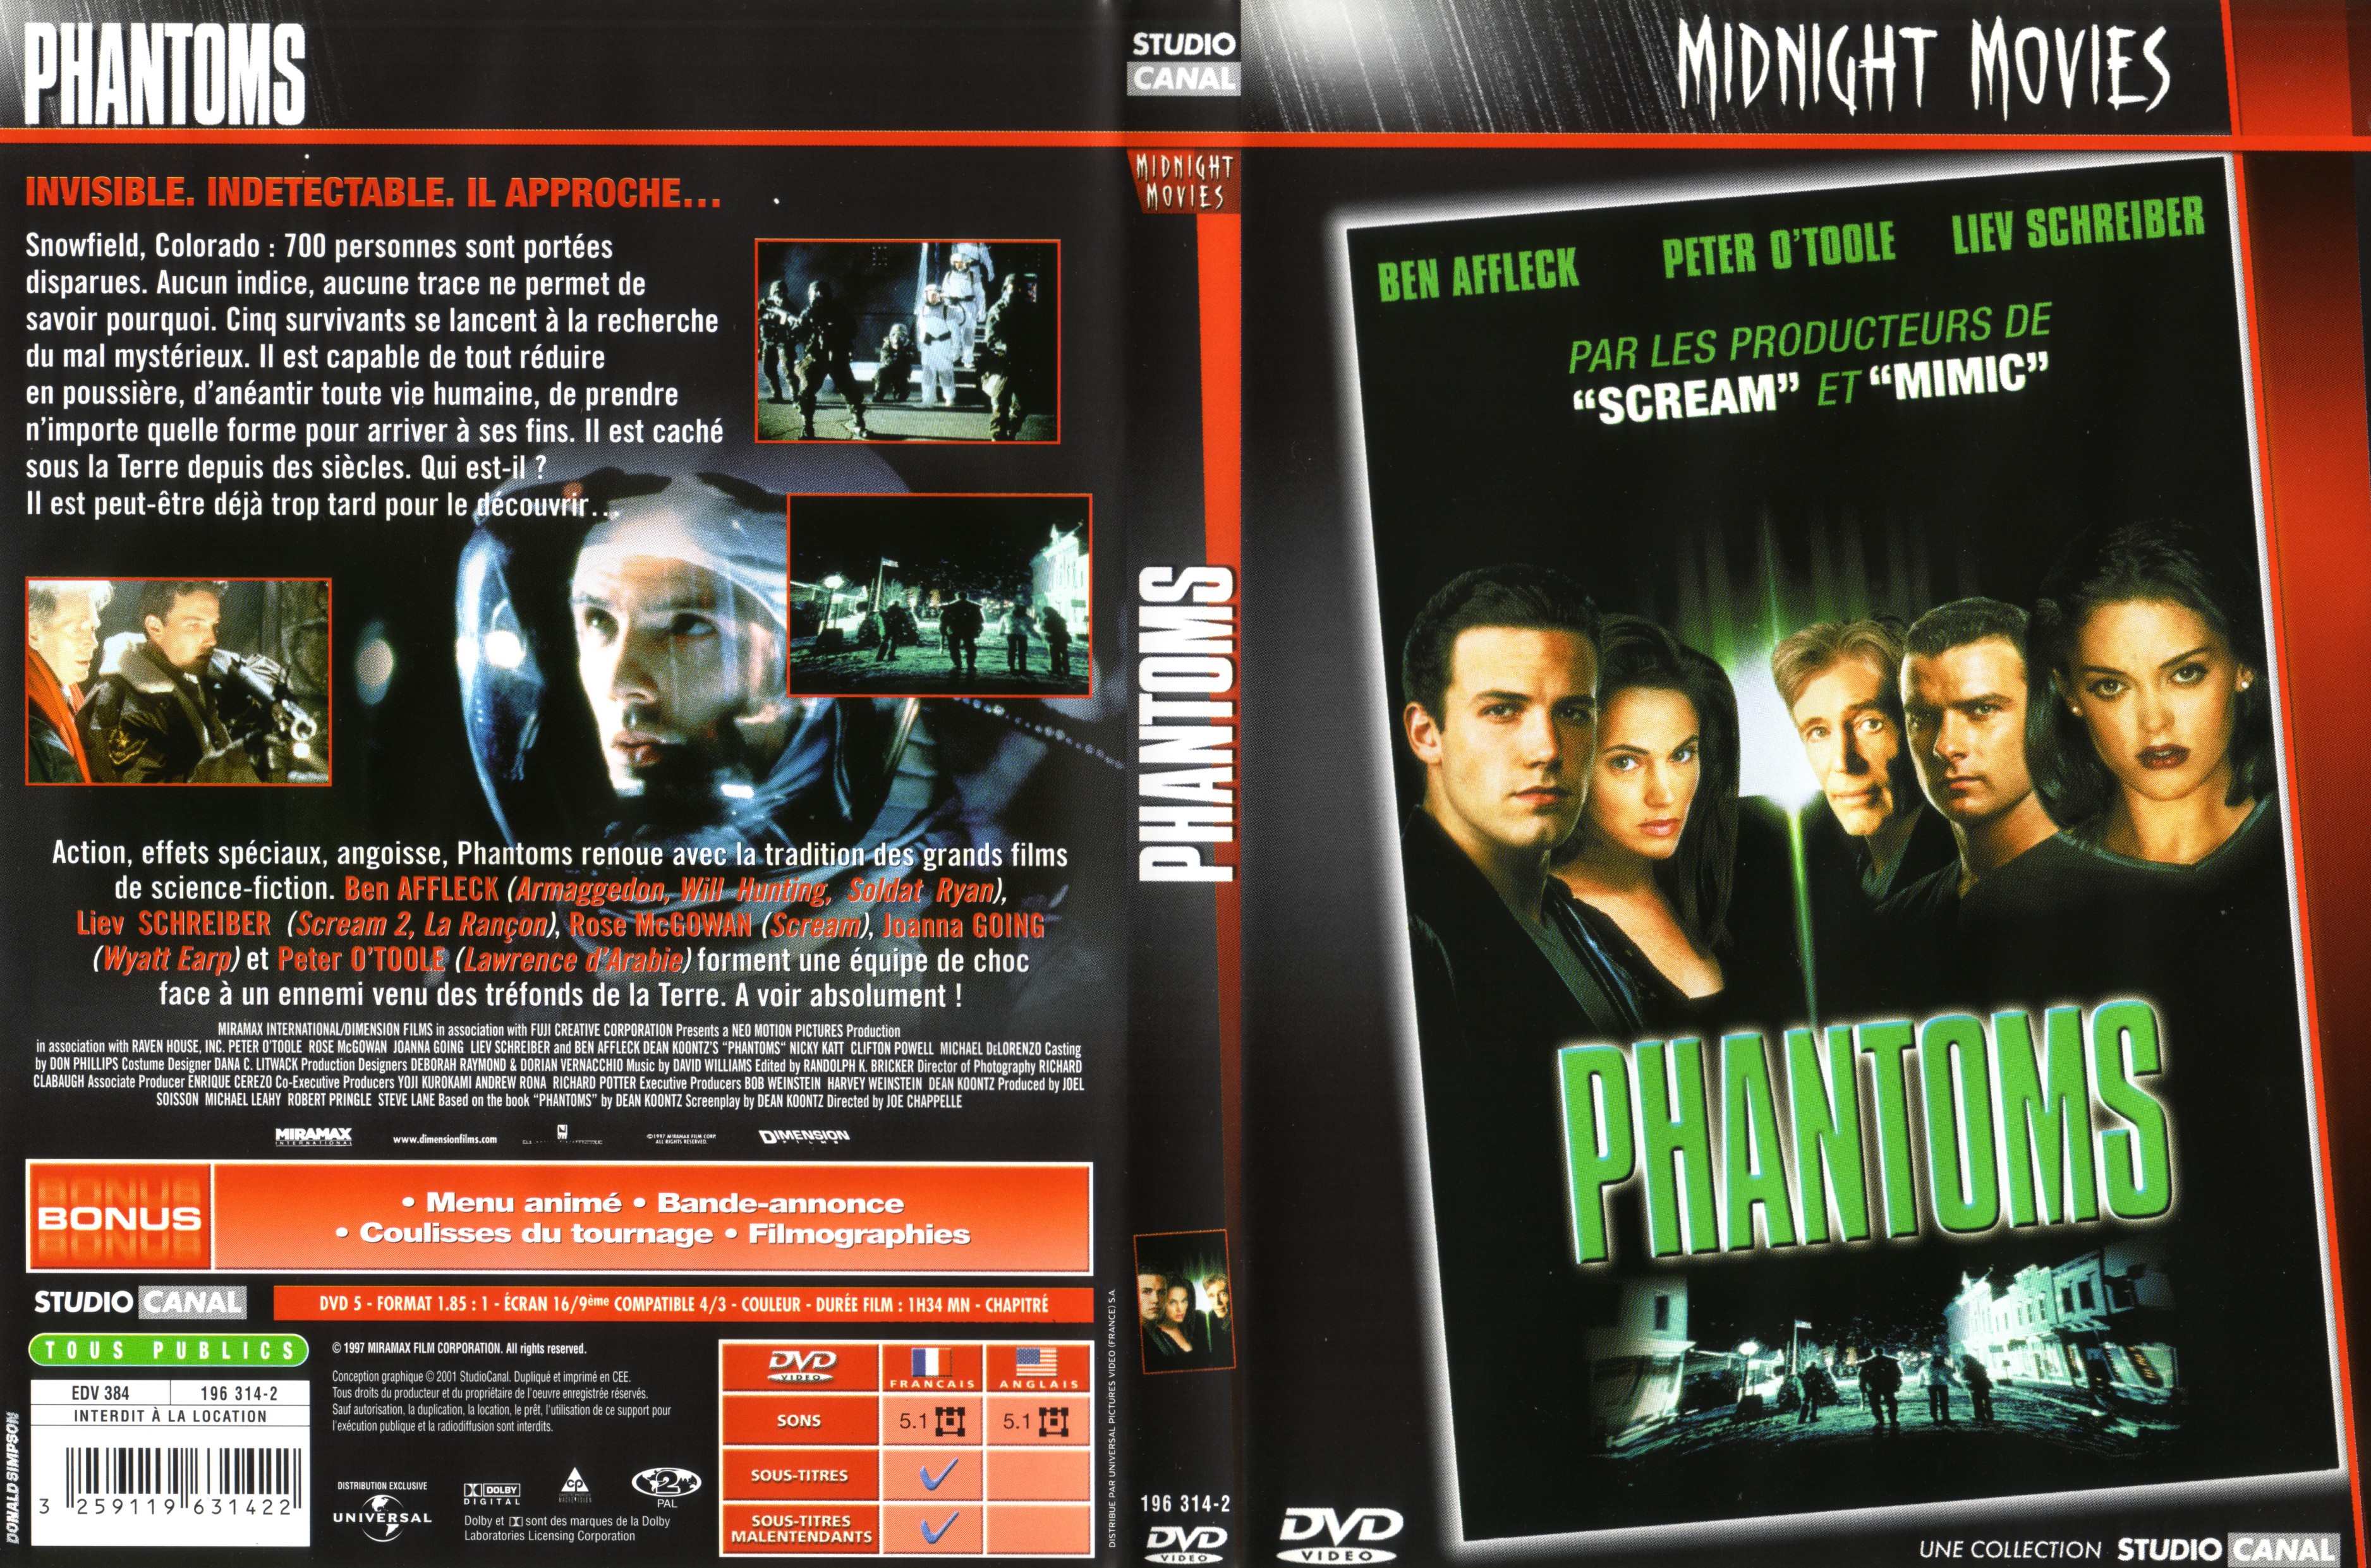 Jaquette DVD Phantoms